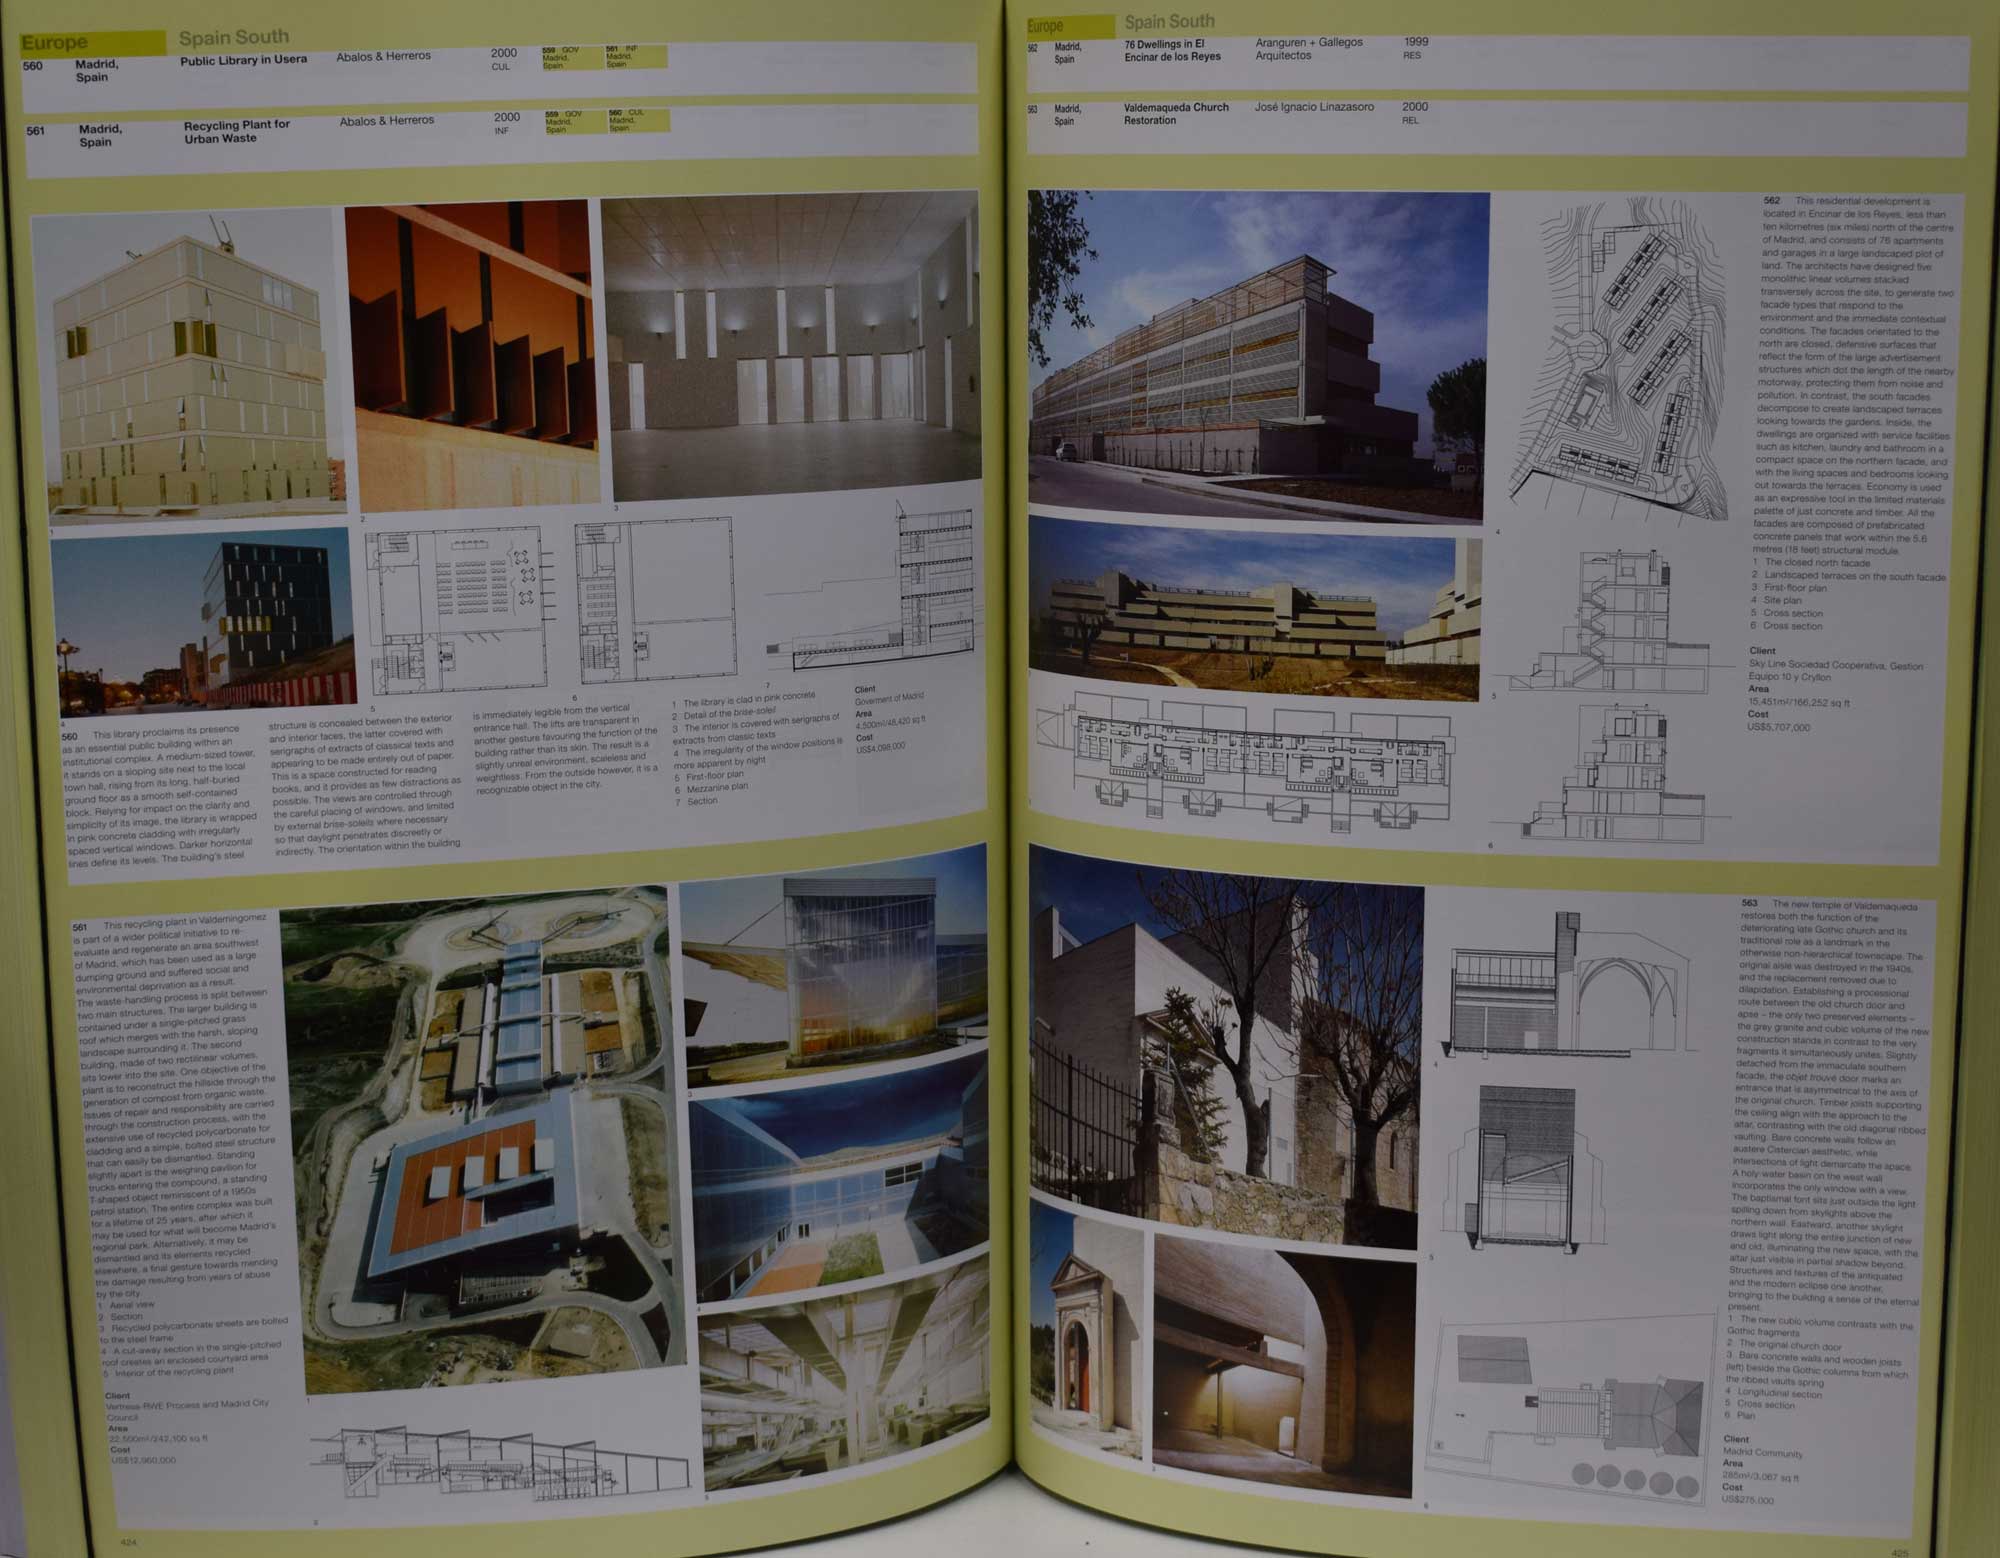 The Phaidon Atlas of Contemporary Architecture